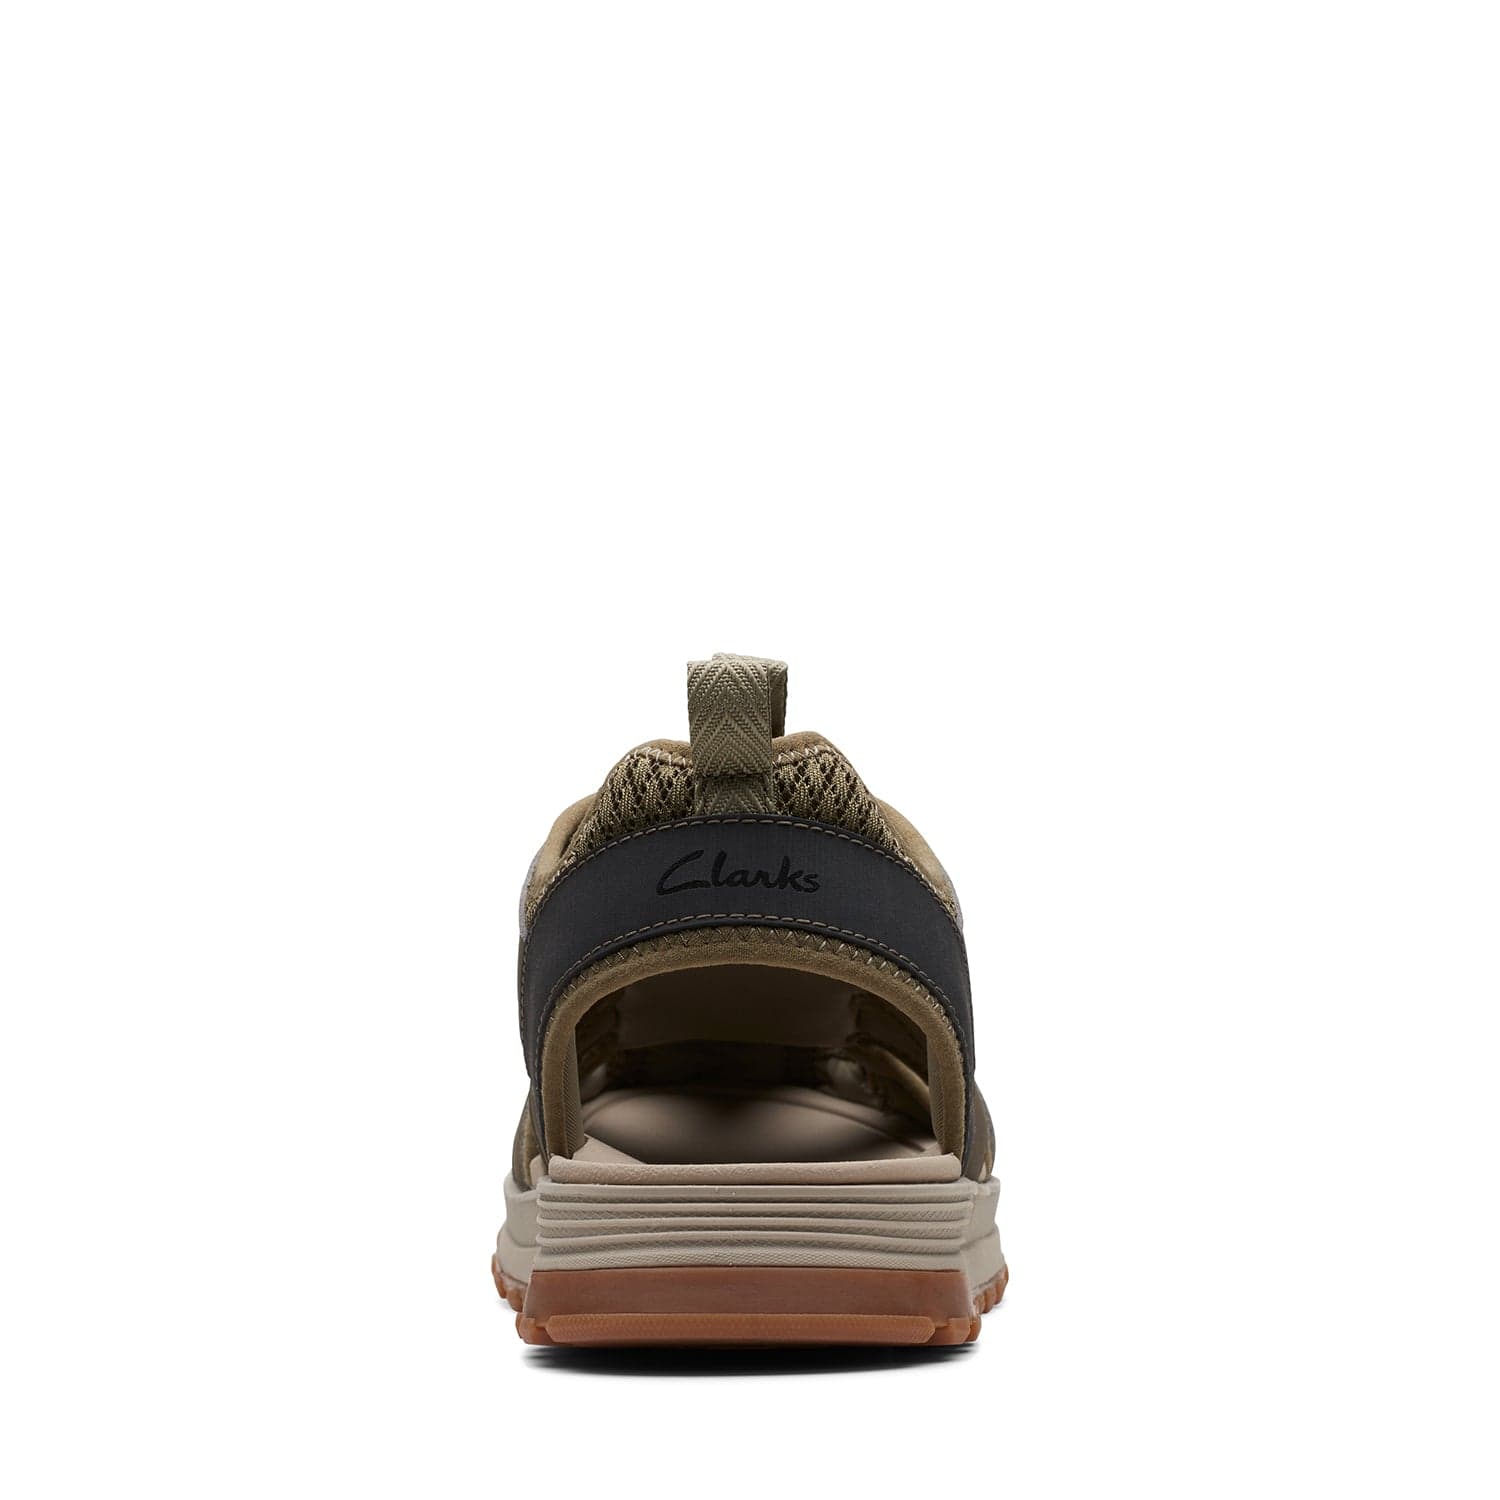 Clarks Atl Trek Wave - Sandals - Olive Combi - 261703207 - G Width (Standard Fit)